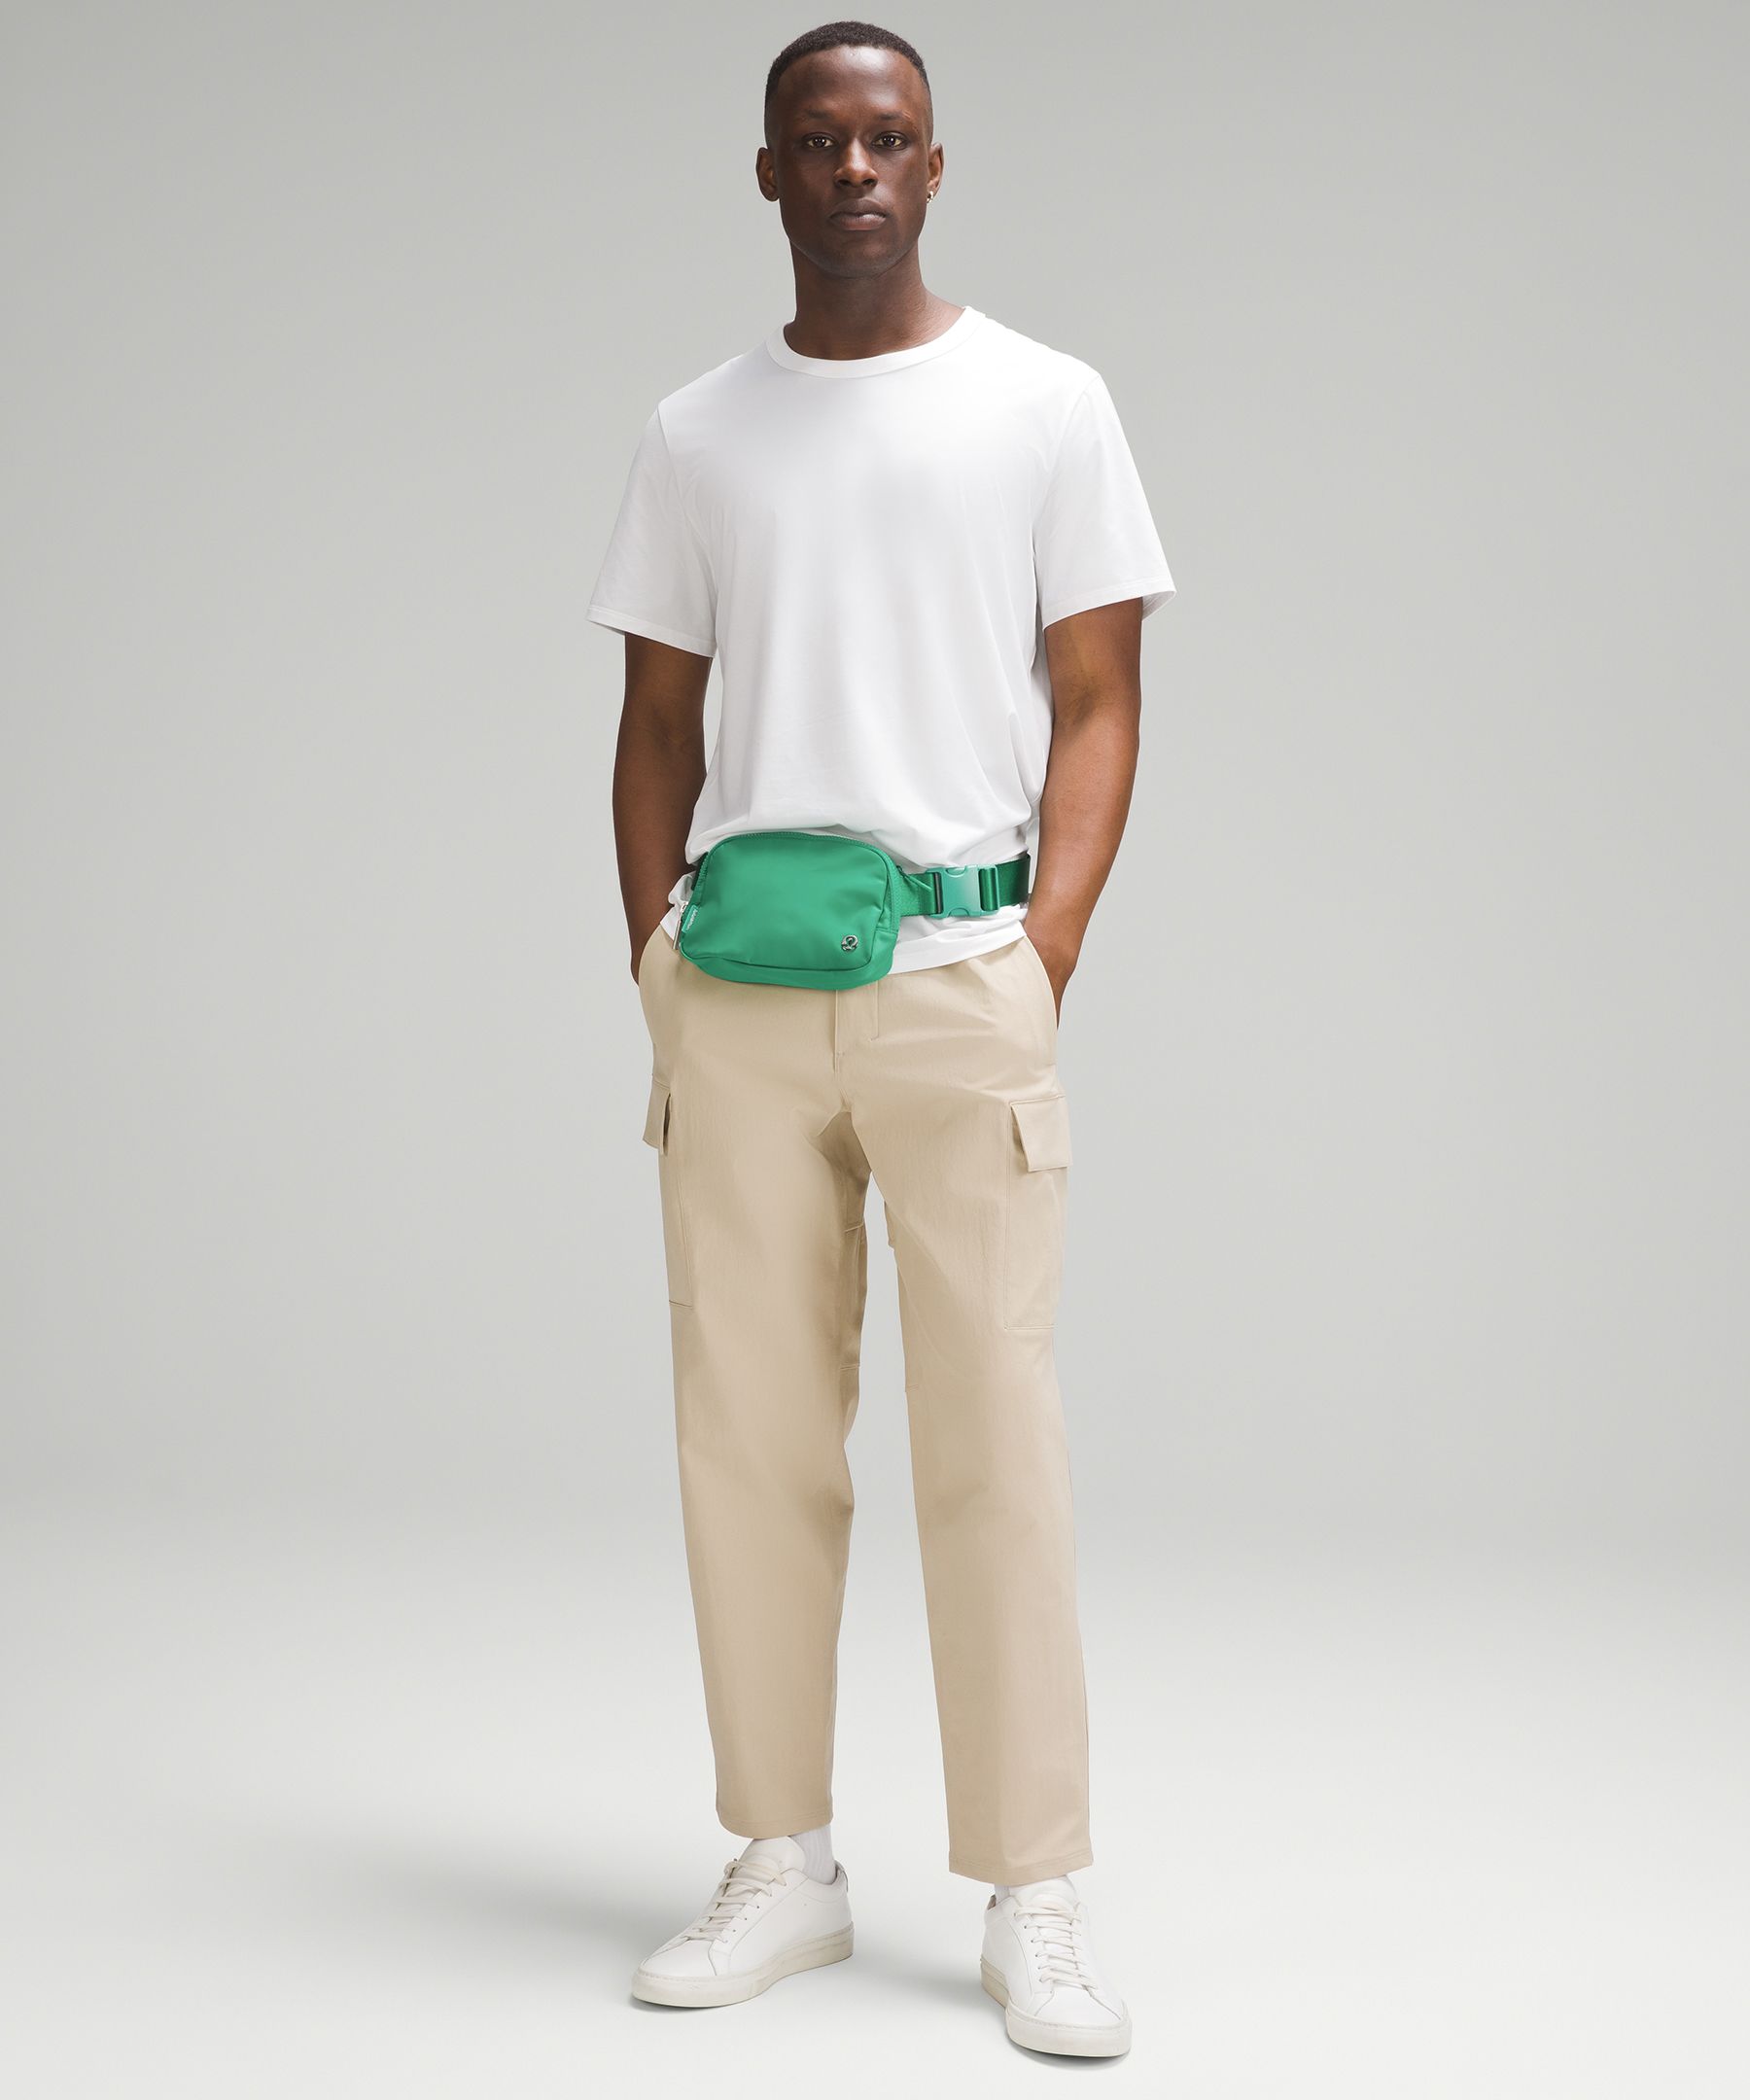 Belt Bag - Khaki green - Men